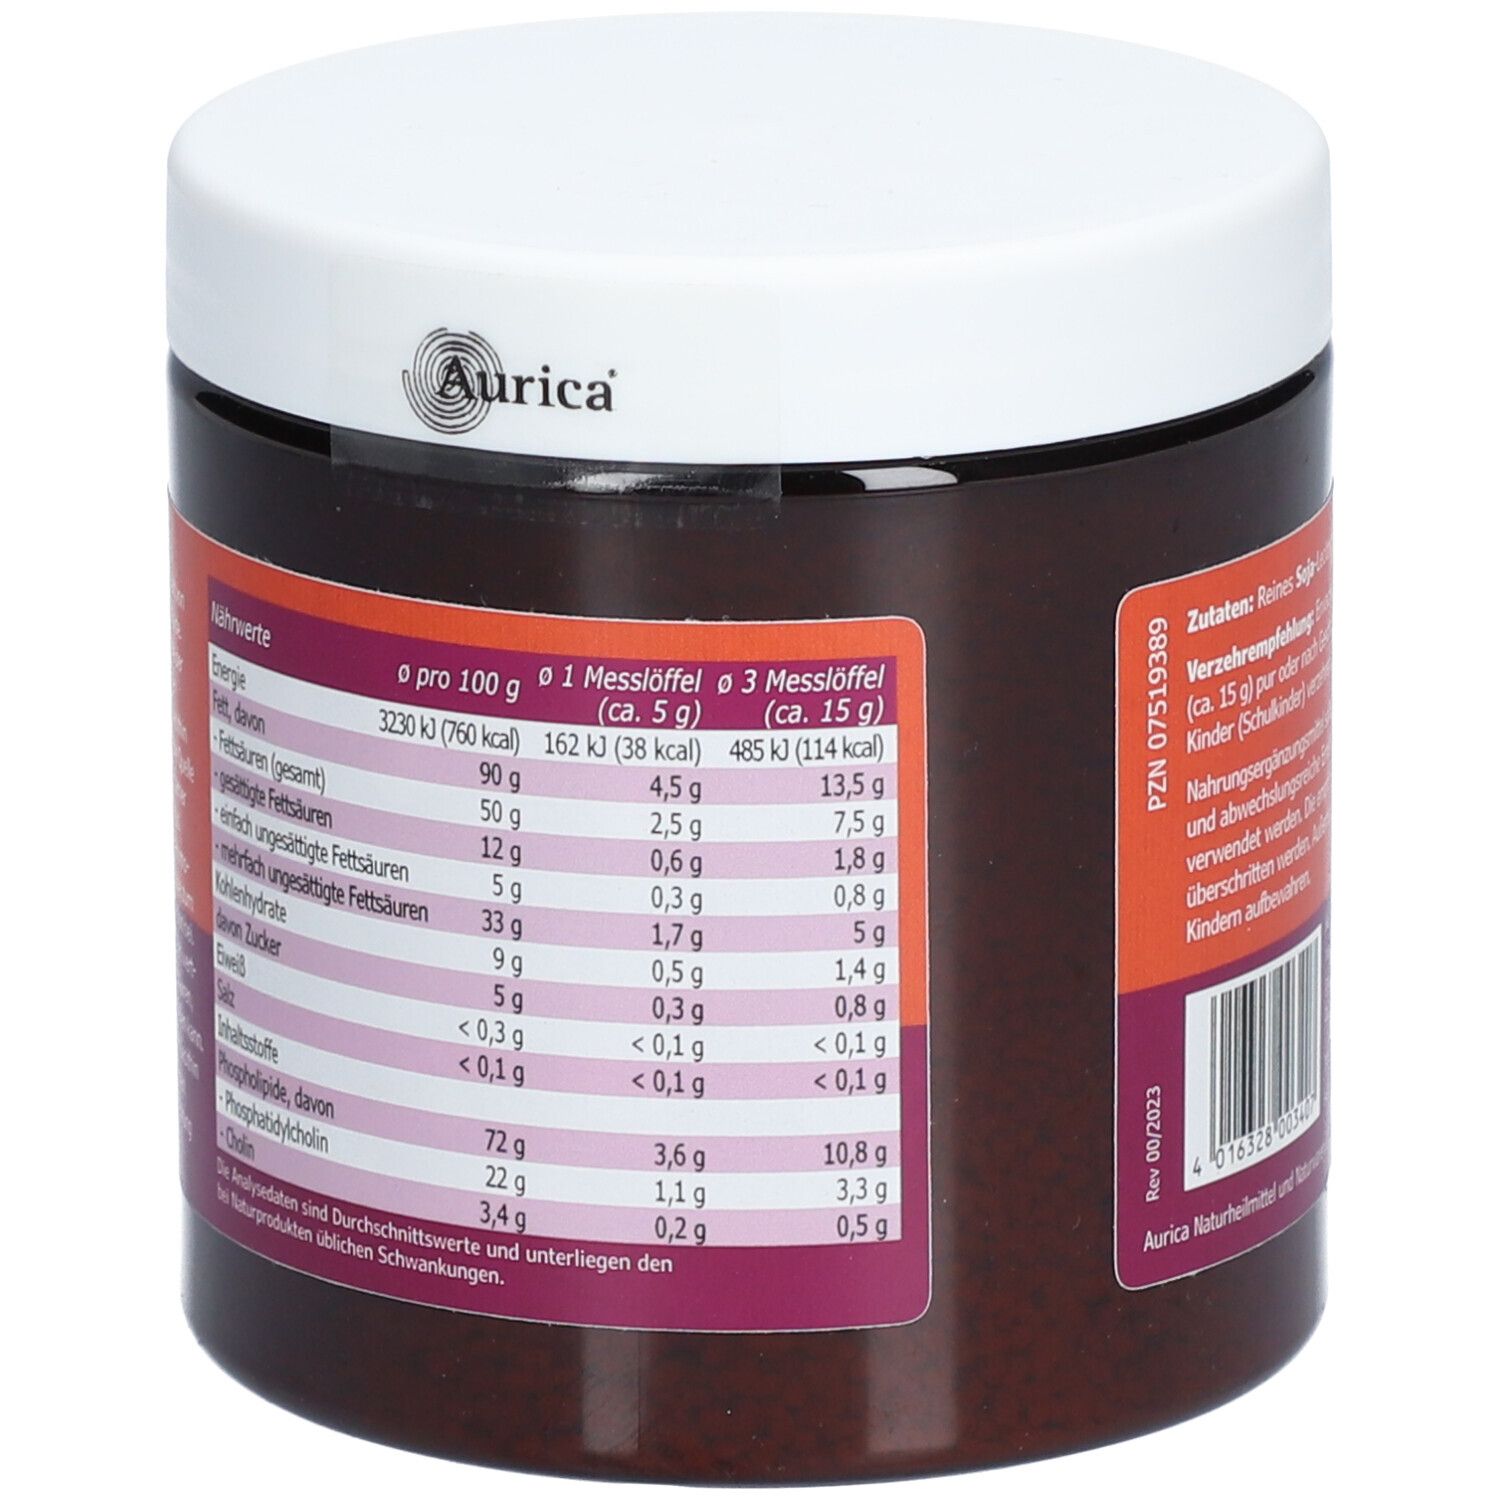 Aurica® Lecithin Granulat